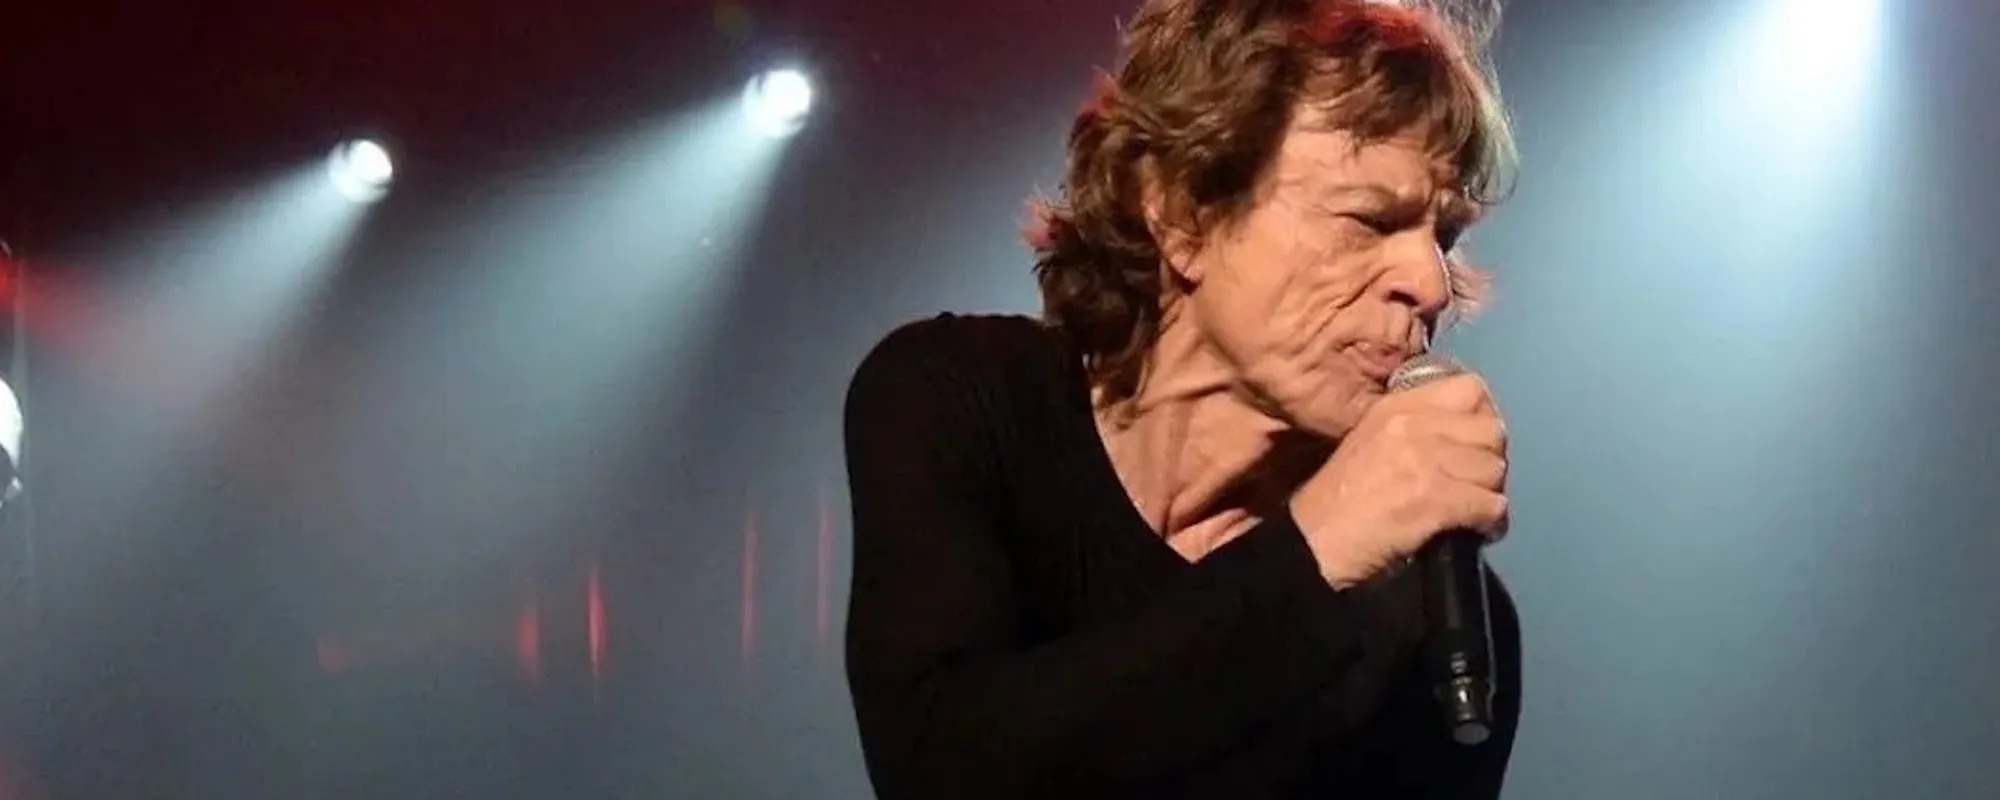 Mick Jagger Says Machine Gun Kelly, Yungblud Bring “Life” to Rock Music Today